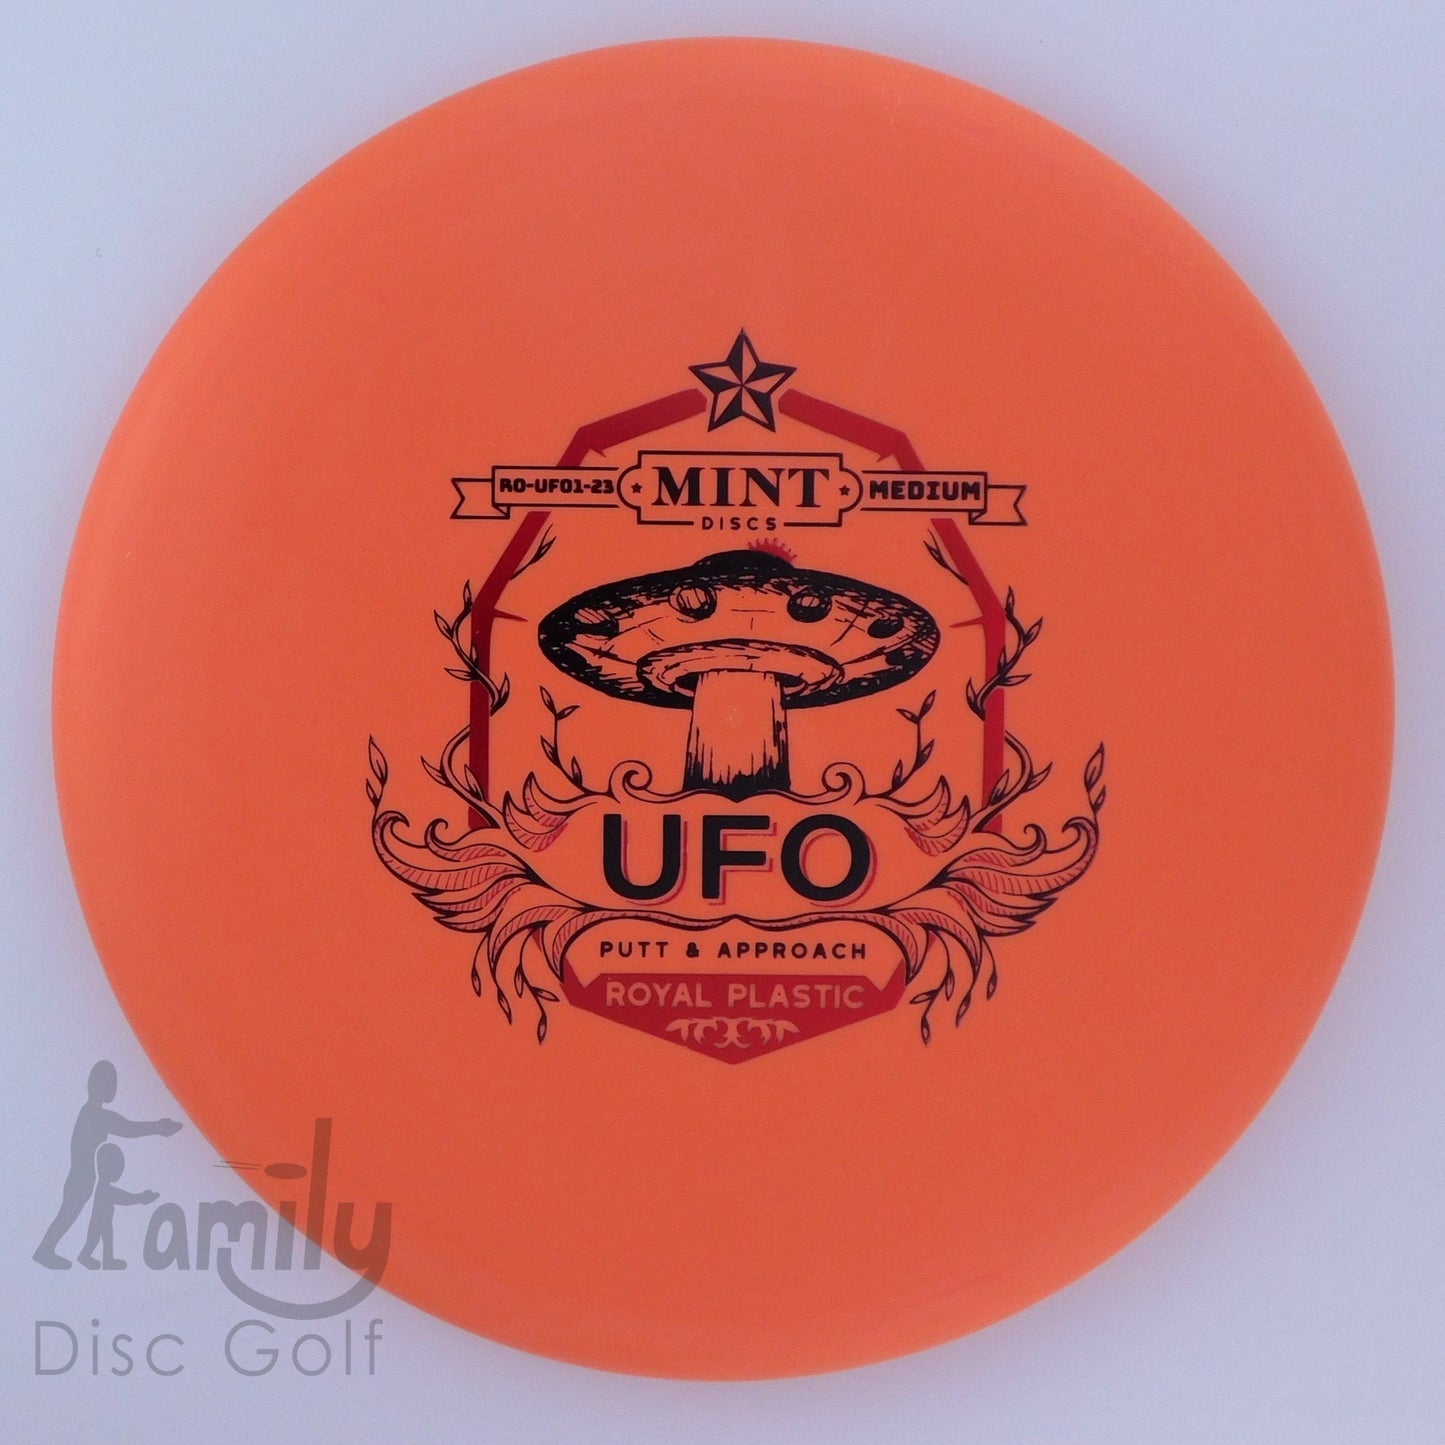 Mint Discs UFO - Royal (Medium) 2│3│0│1 172.8g - Orange - Mint Discs UFO - Royal - 101557